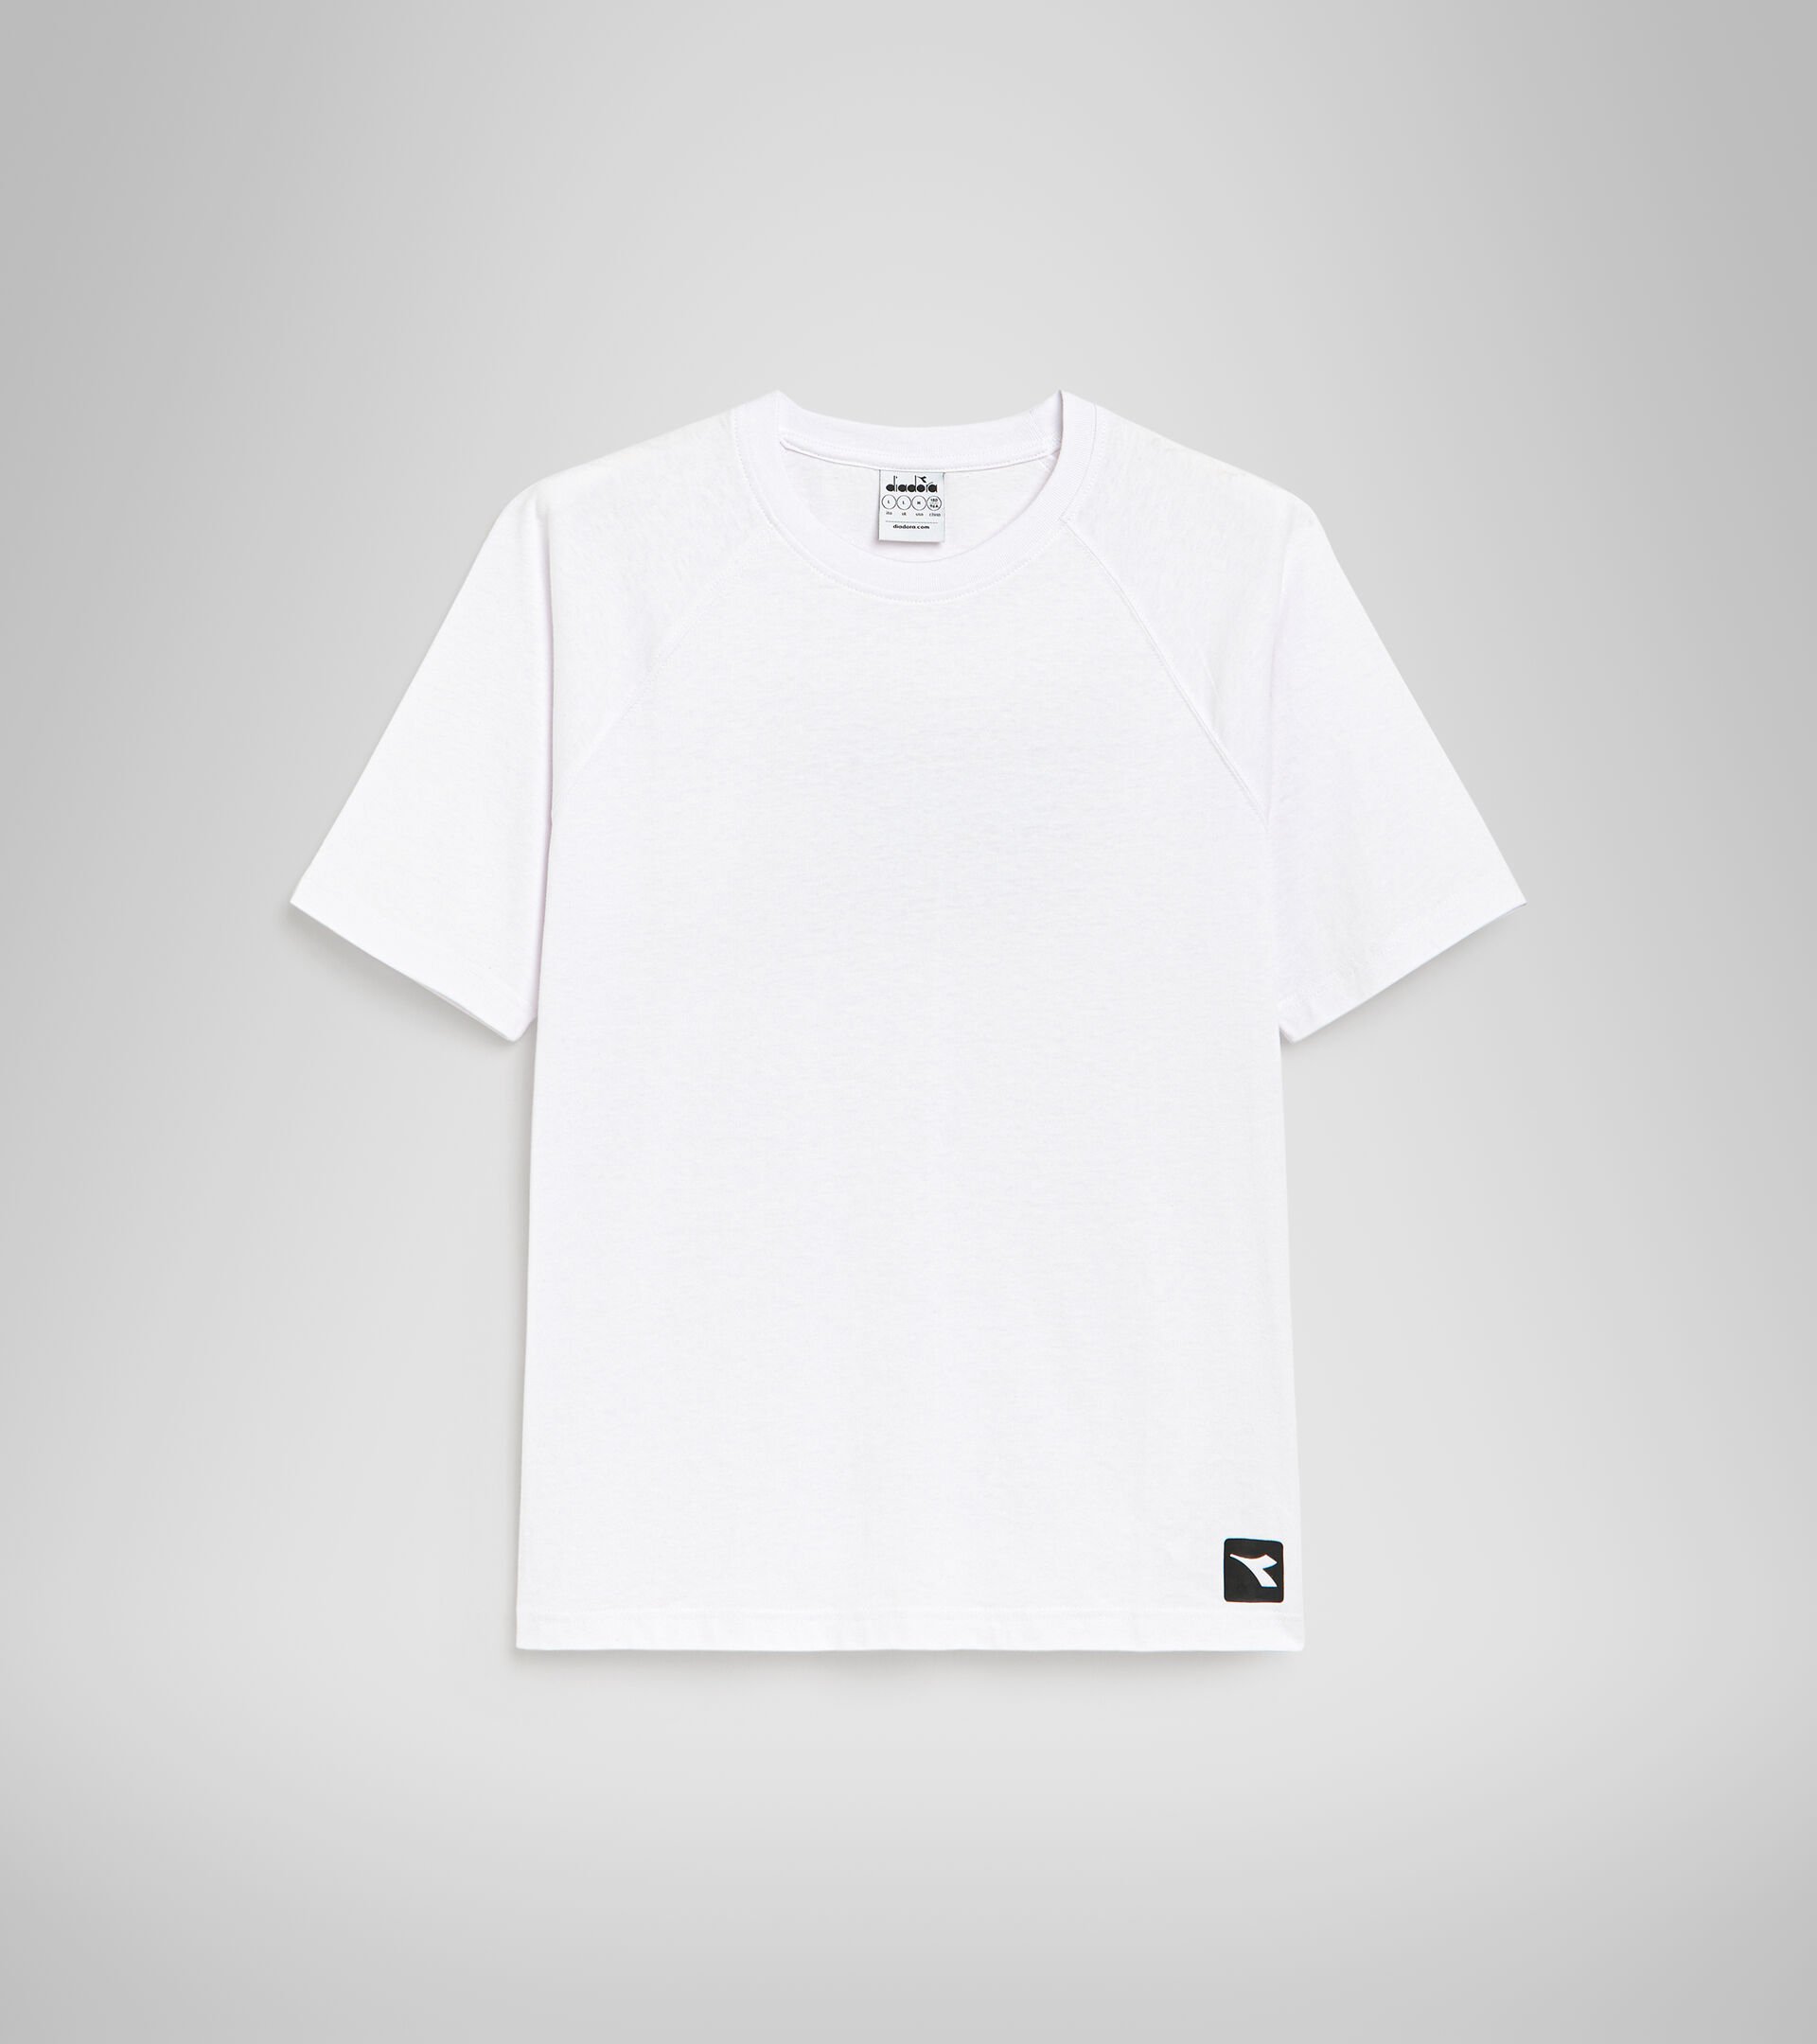 Cotton and polyester T-shirt - Men’s T-SHIRT SS  URBANITY OPTICAL WHITE/BLACK - Diadora